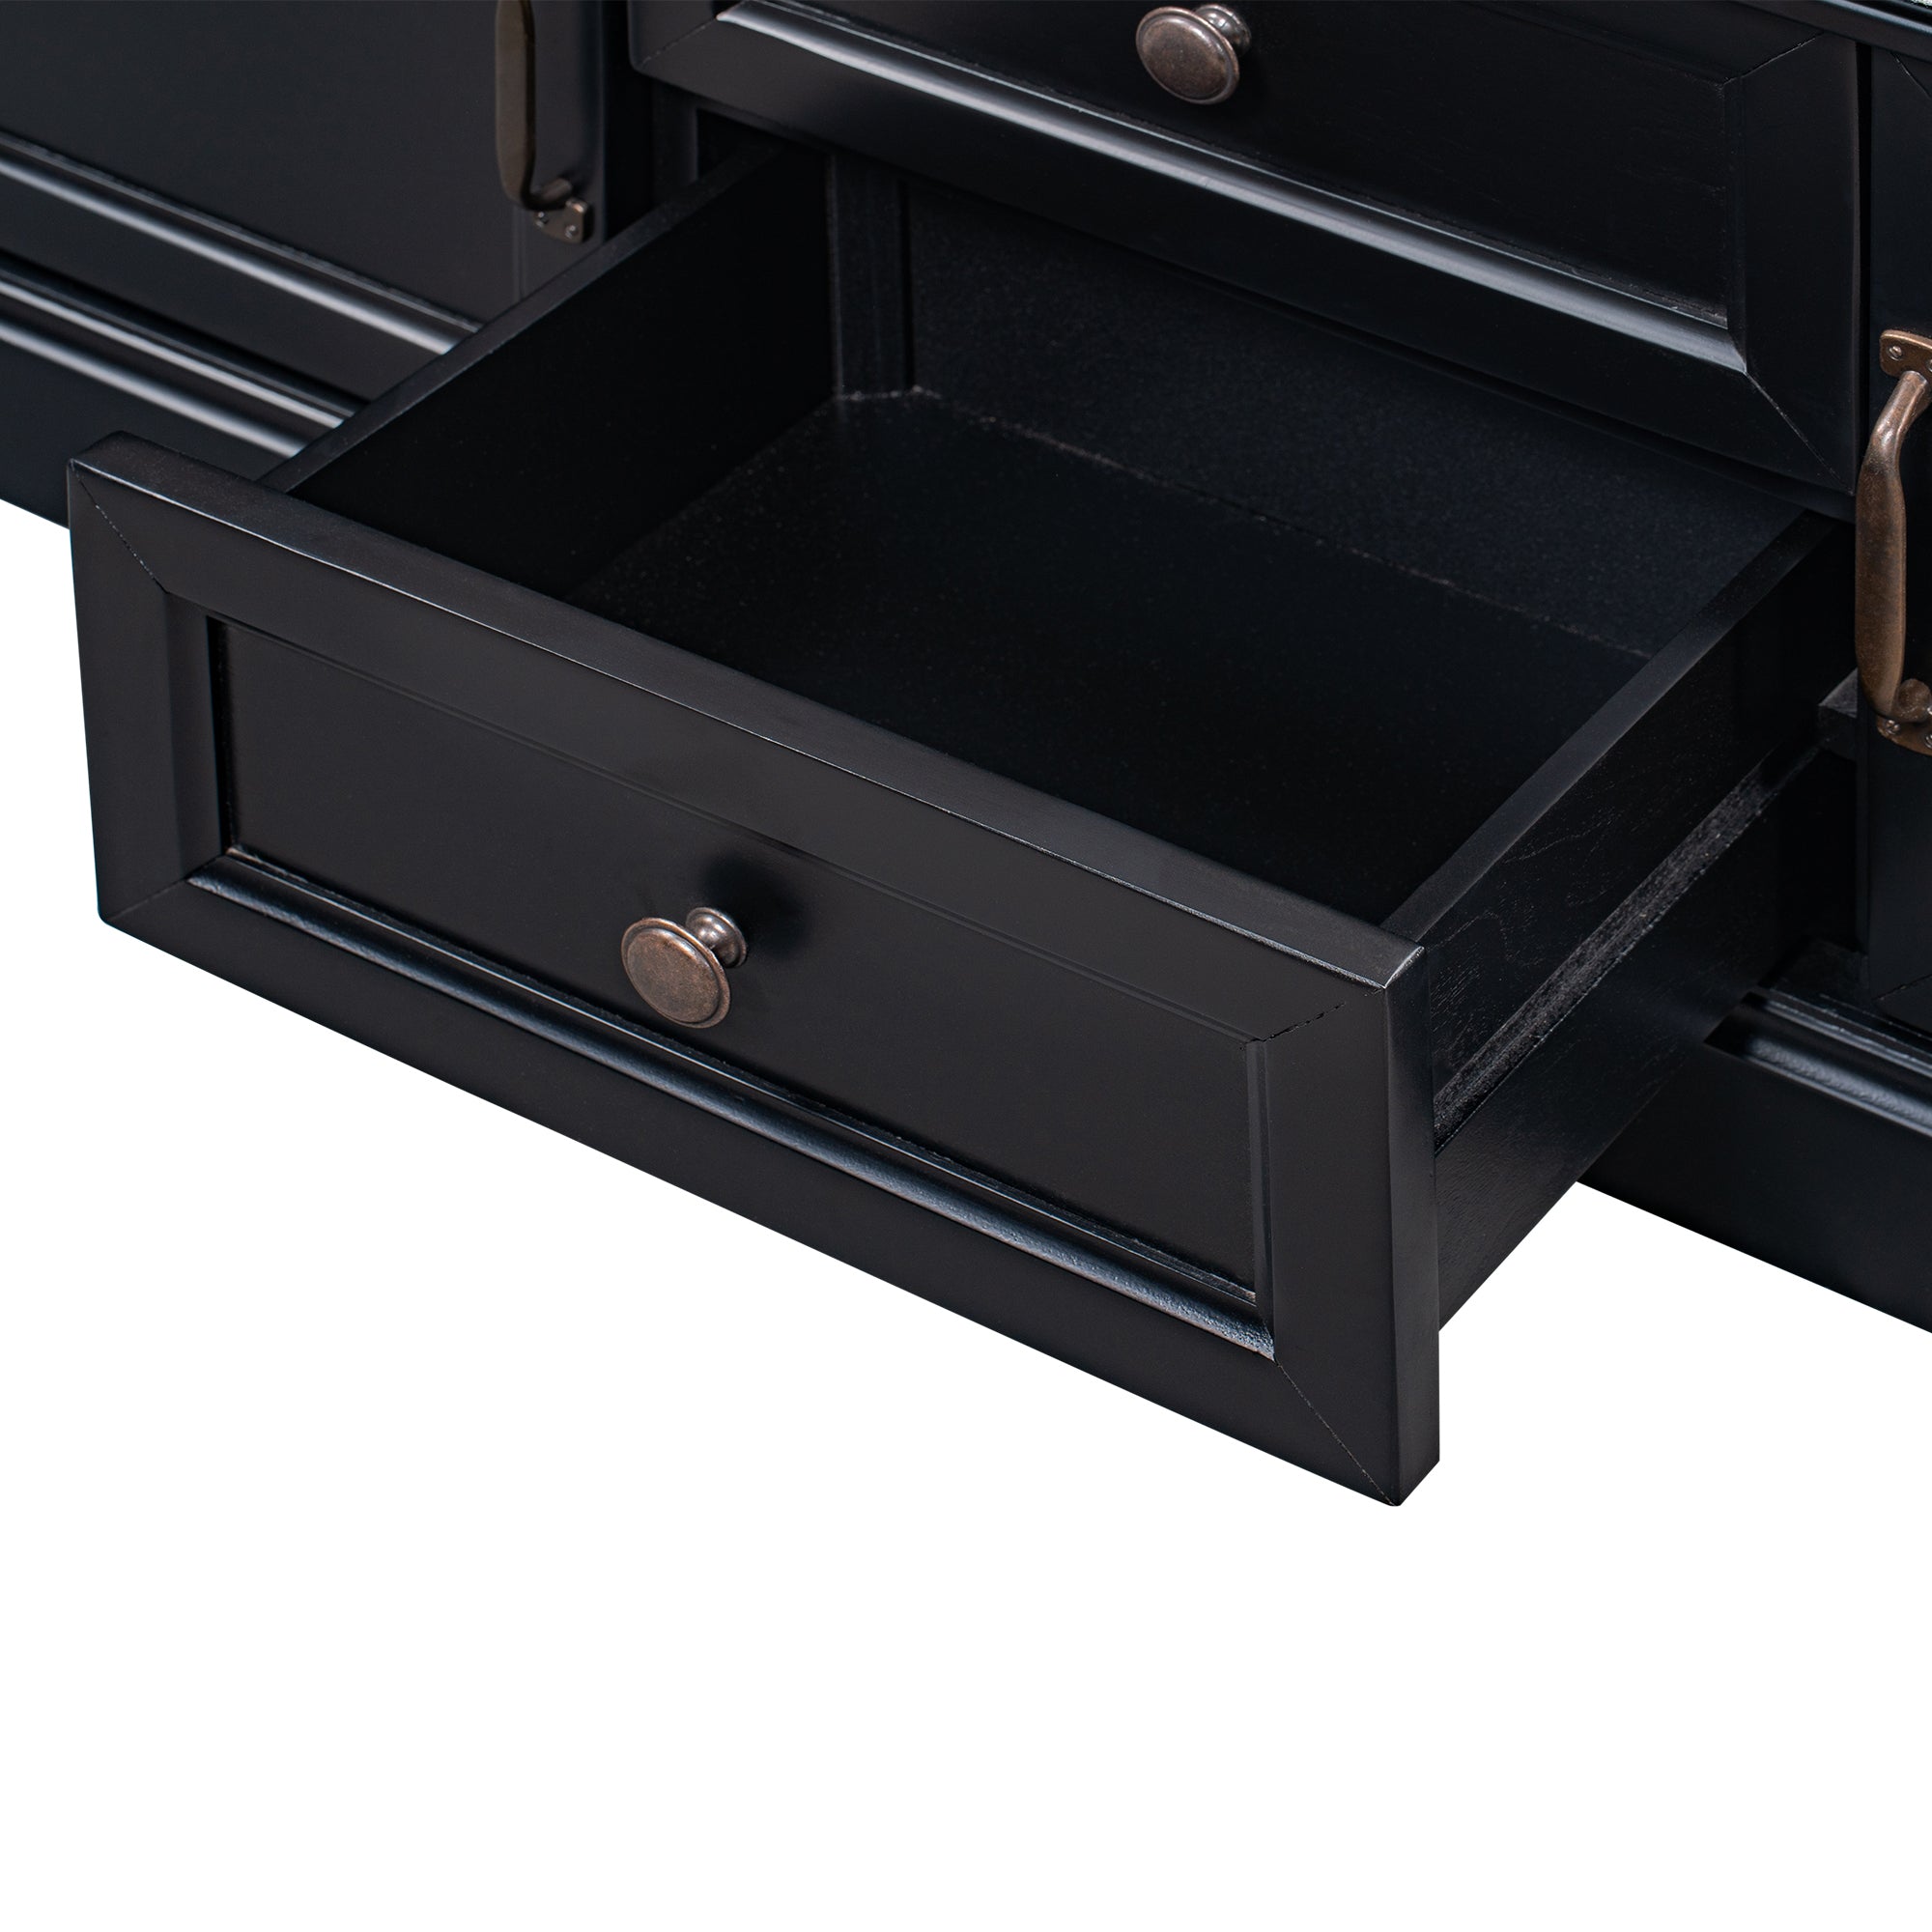 TREXM Storage Bench (Black)